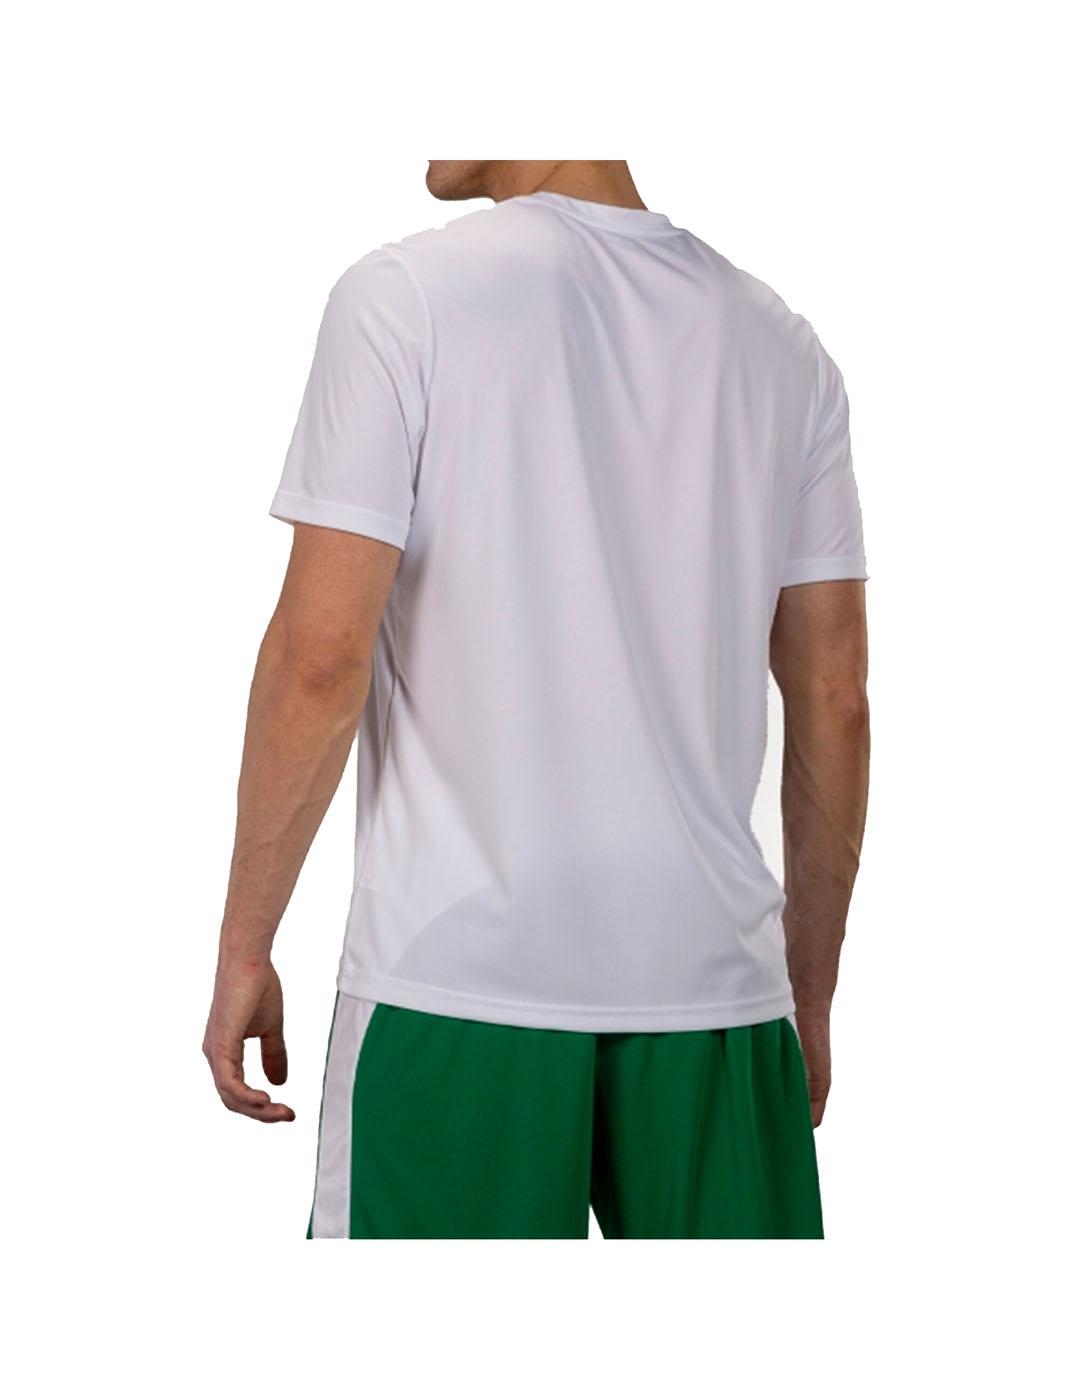 Camiseta manga larga hombre Combi blanco